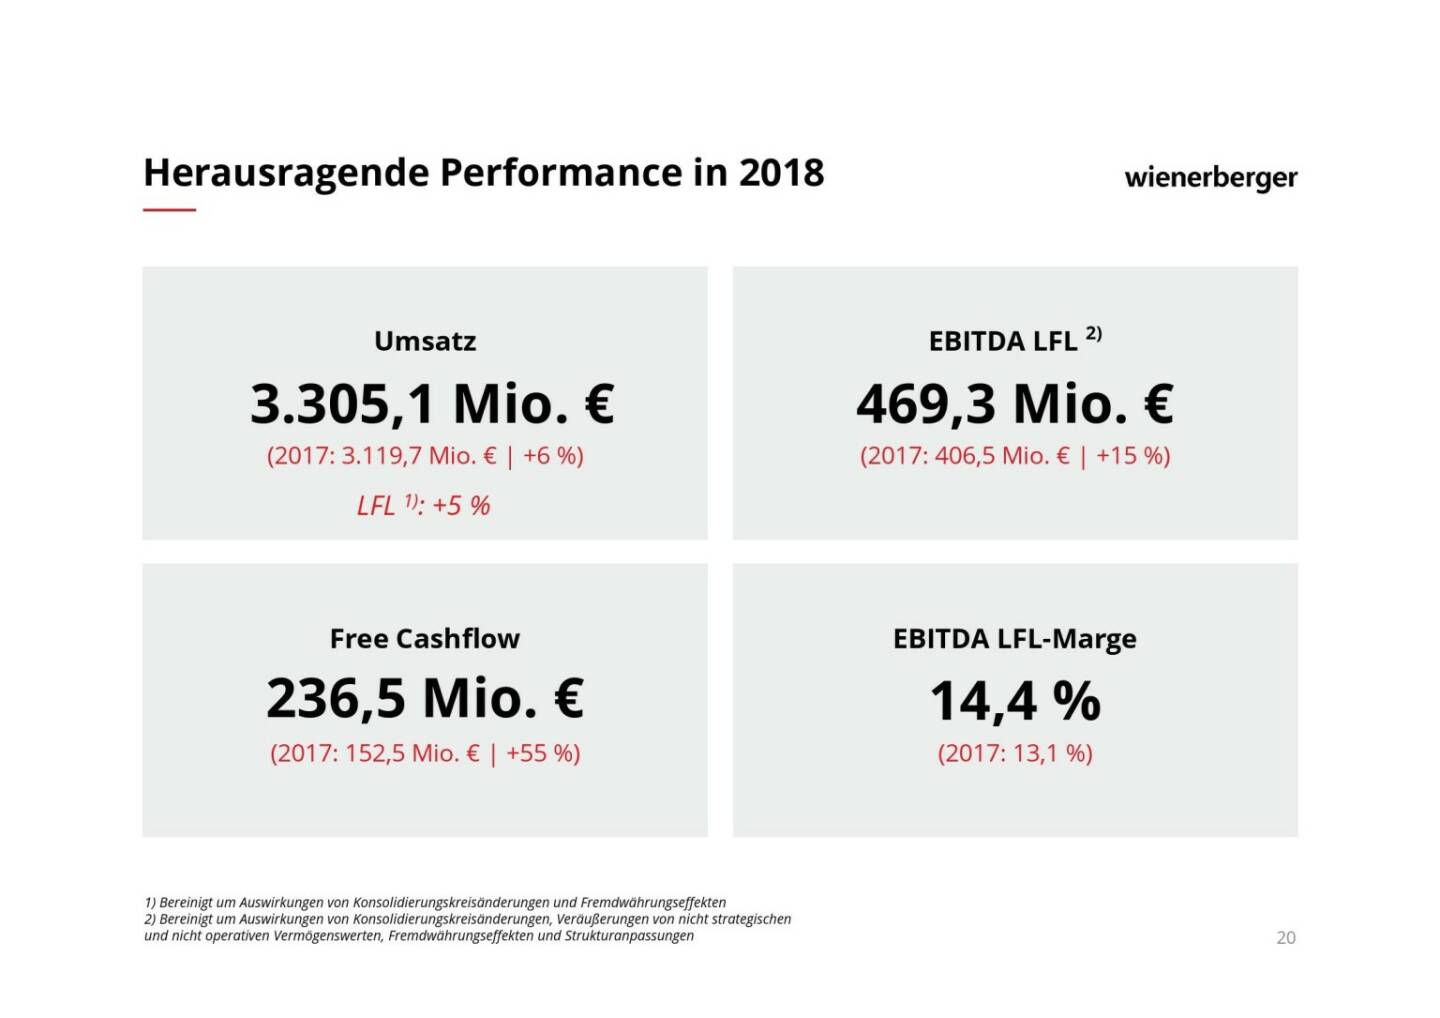 Wienerberger - Herausragende Performance in 2018